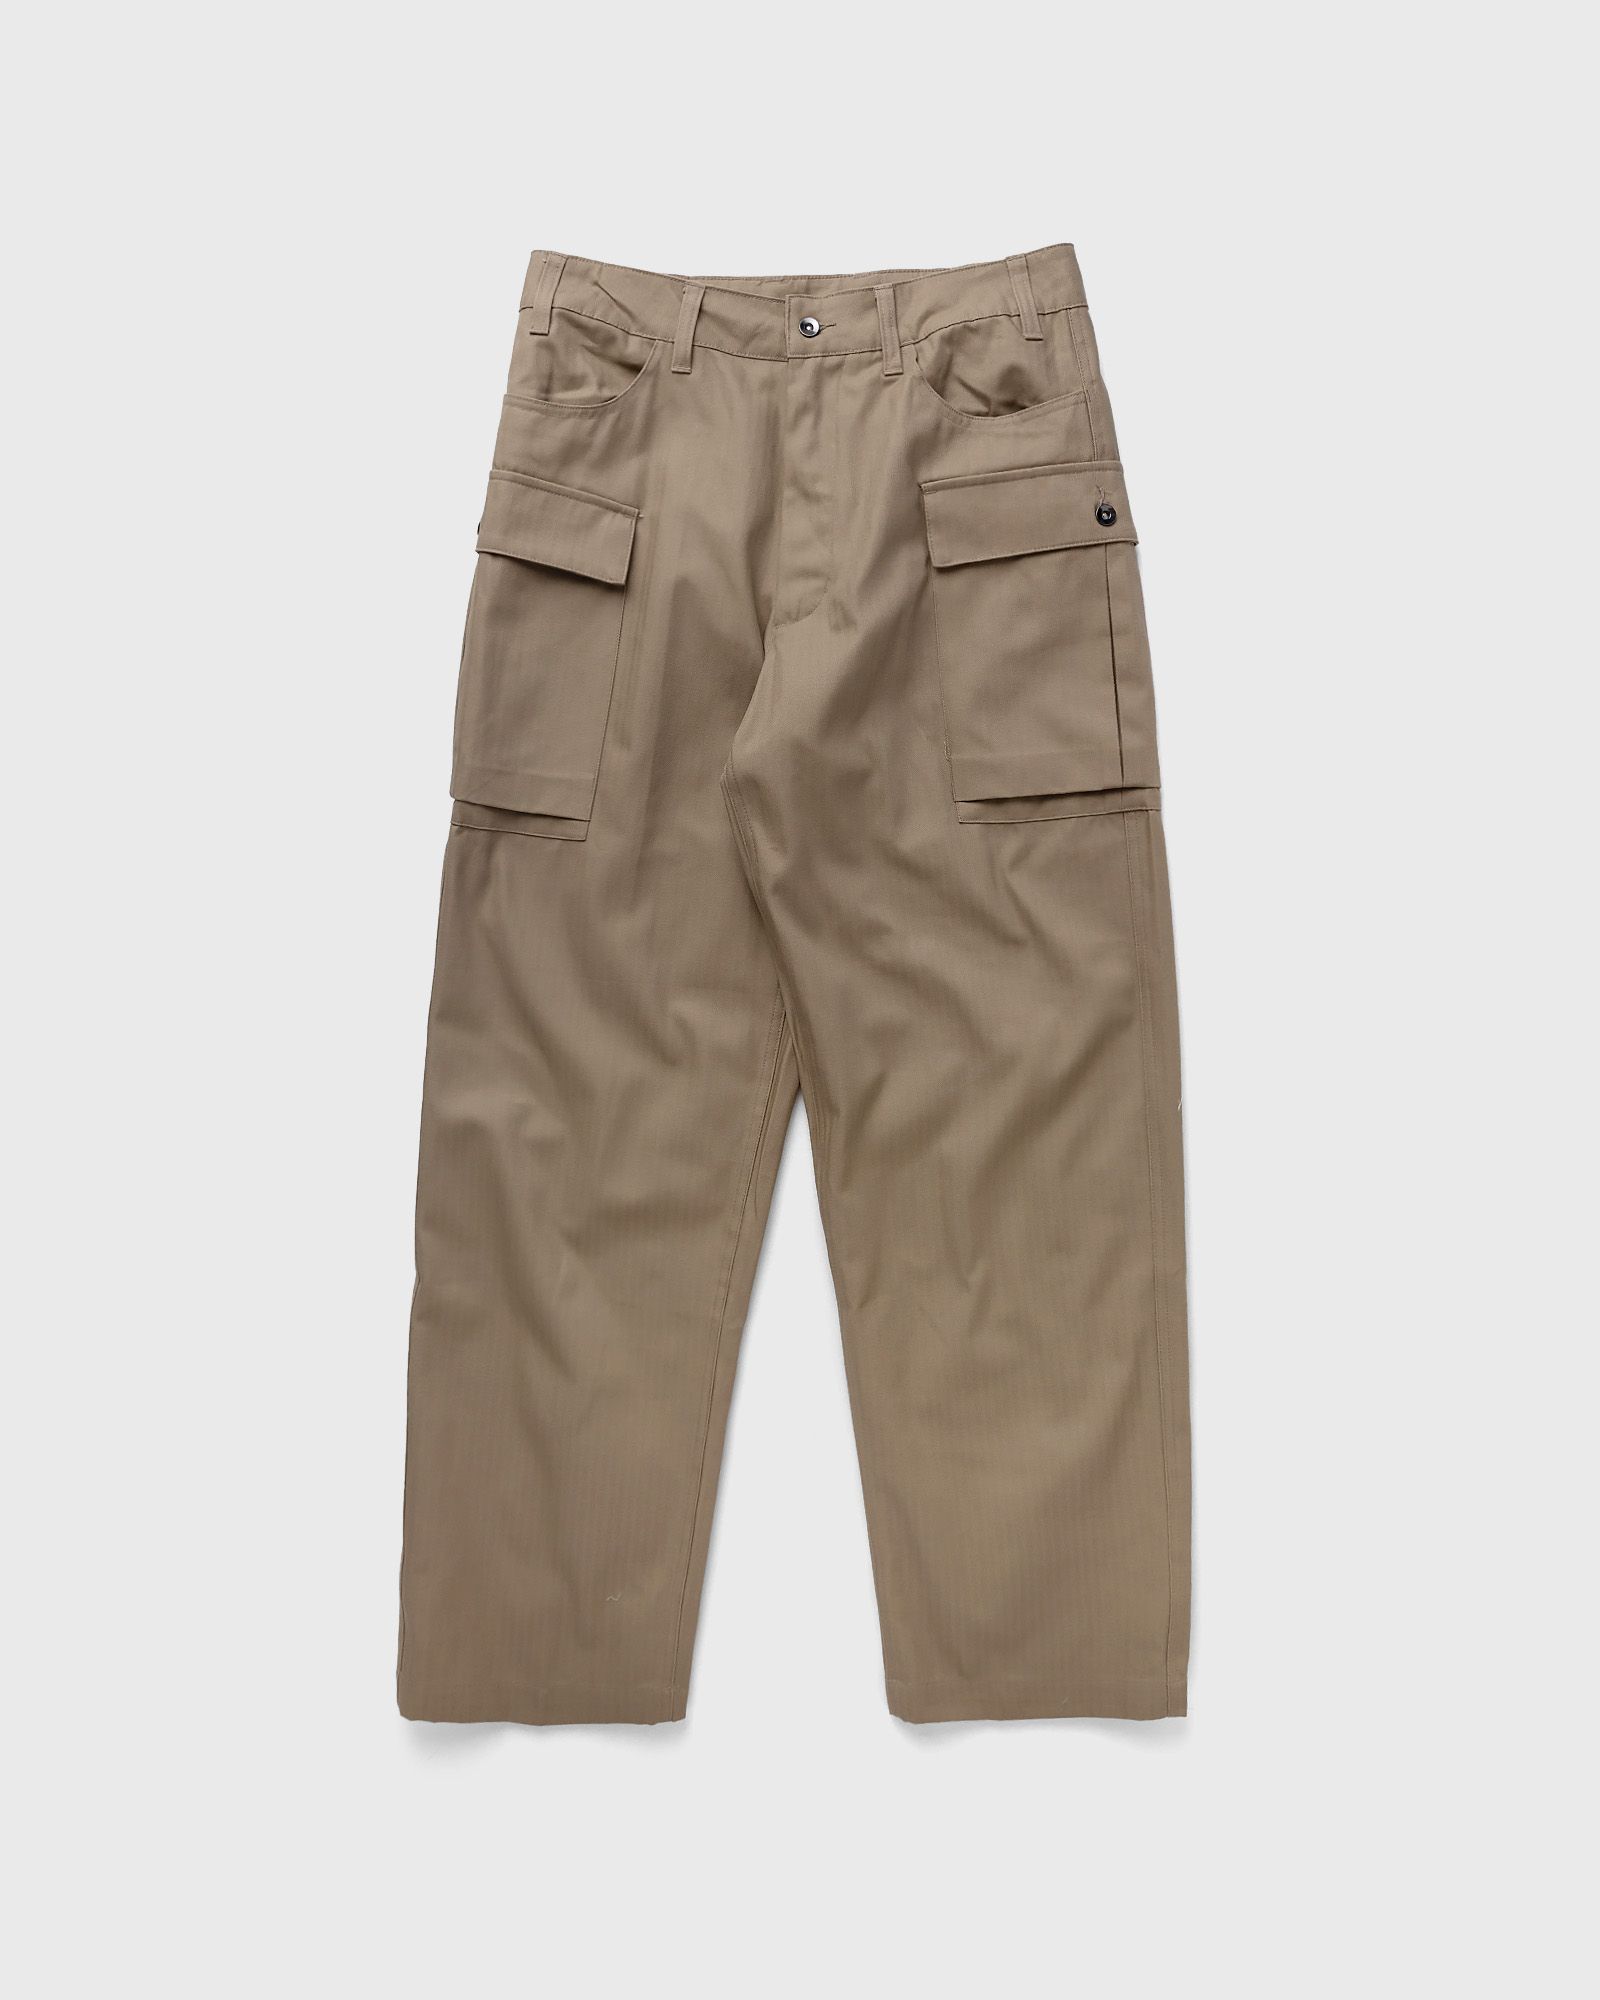 Nike - life men's cargo pants men cargo pants brown in größe:xxl